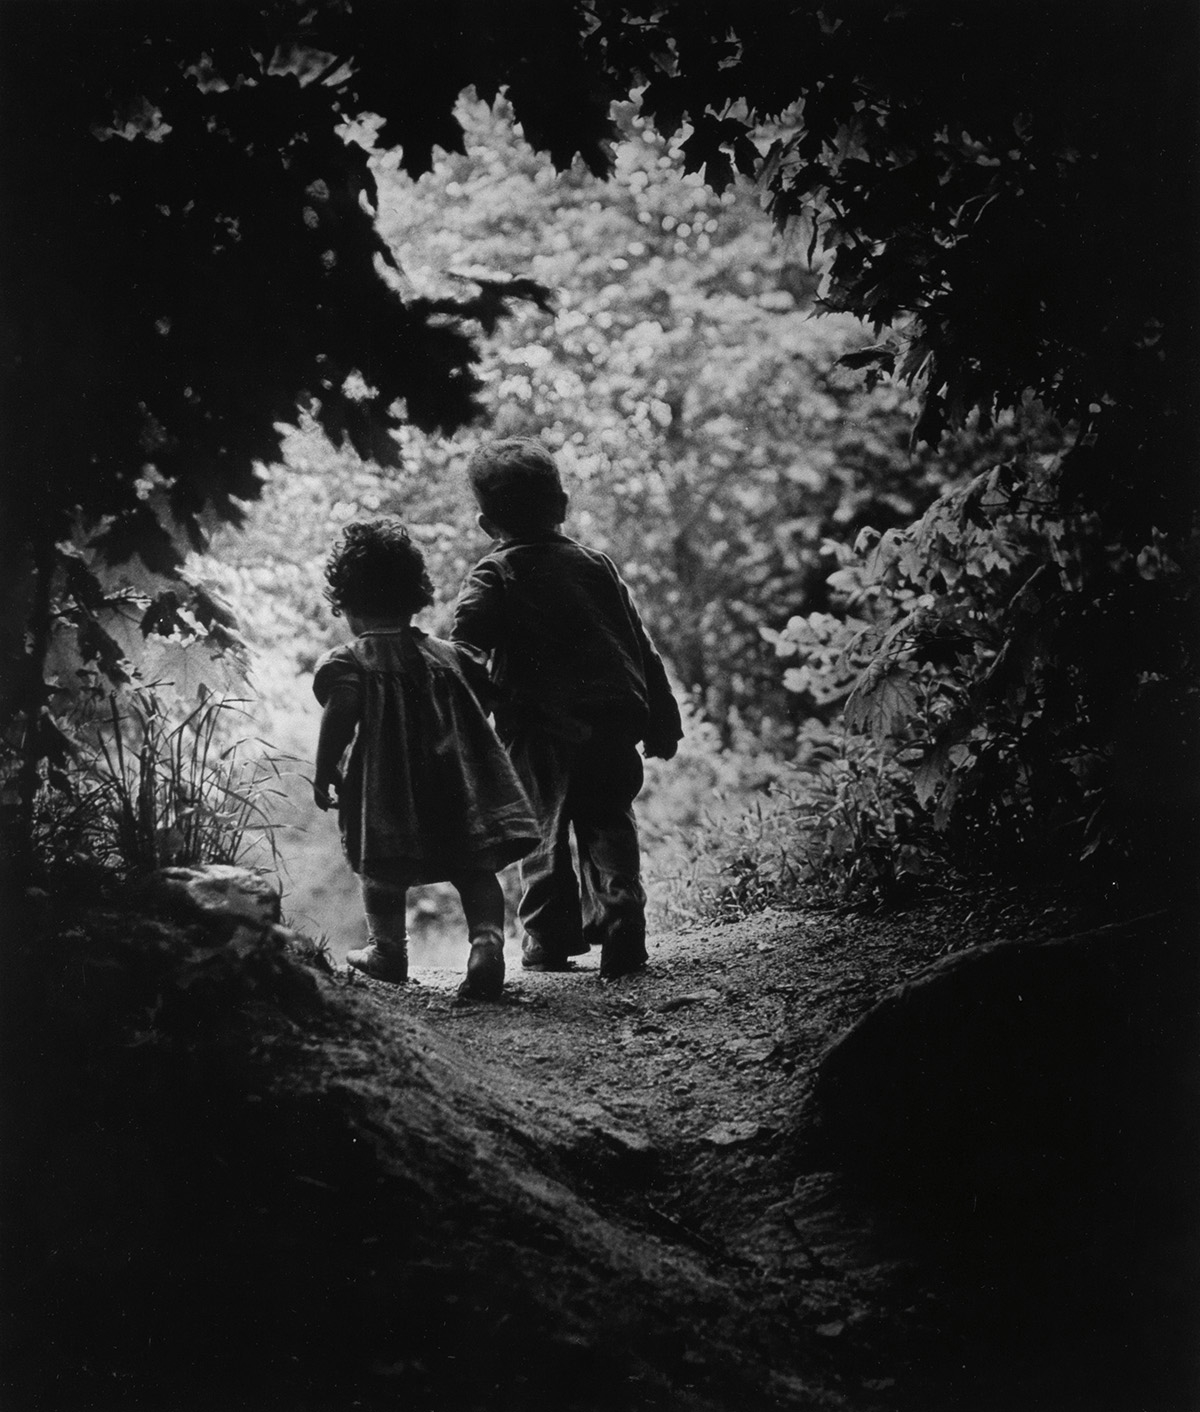 The Walk to Paradise Garden by W. Eugene Smith, 1948